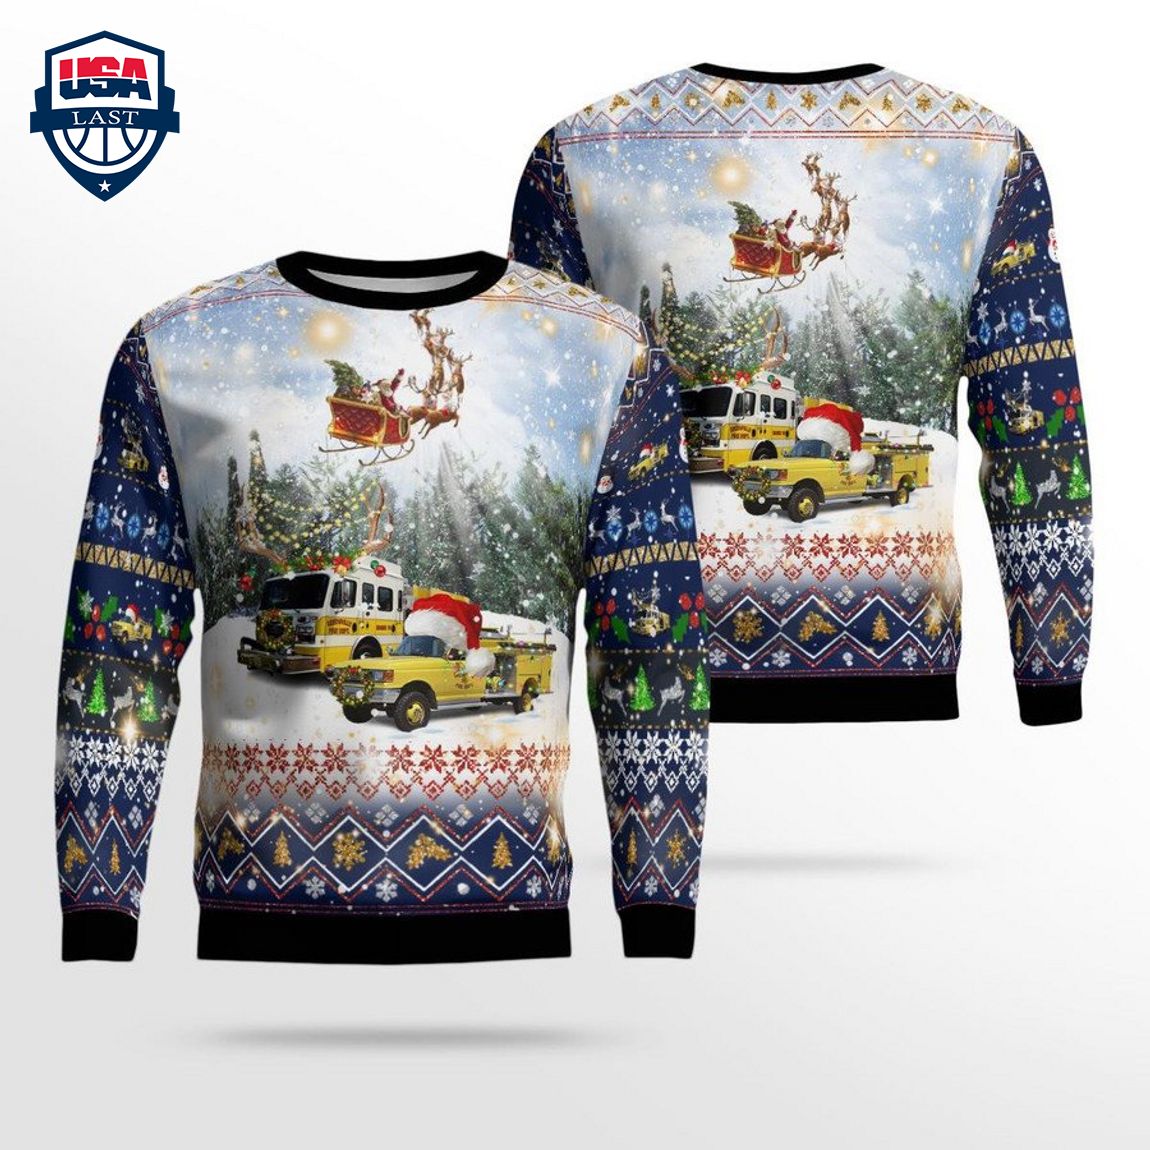 Wisconsin Reedsville Volunteer Fire Department 3D Christmas Sweater